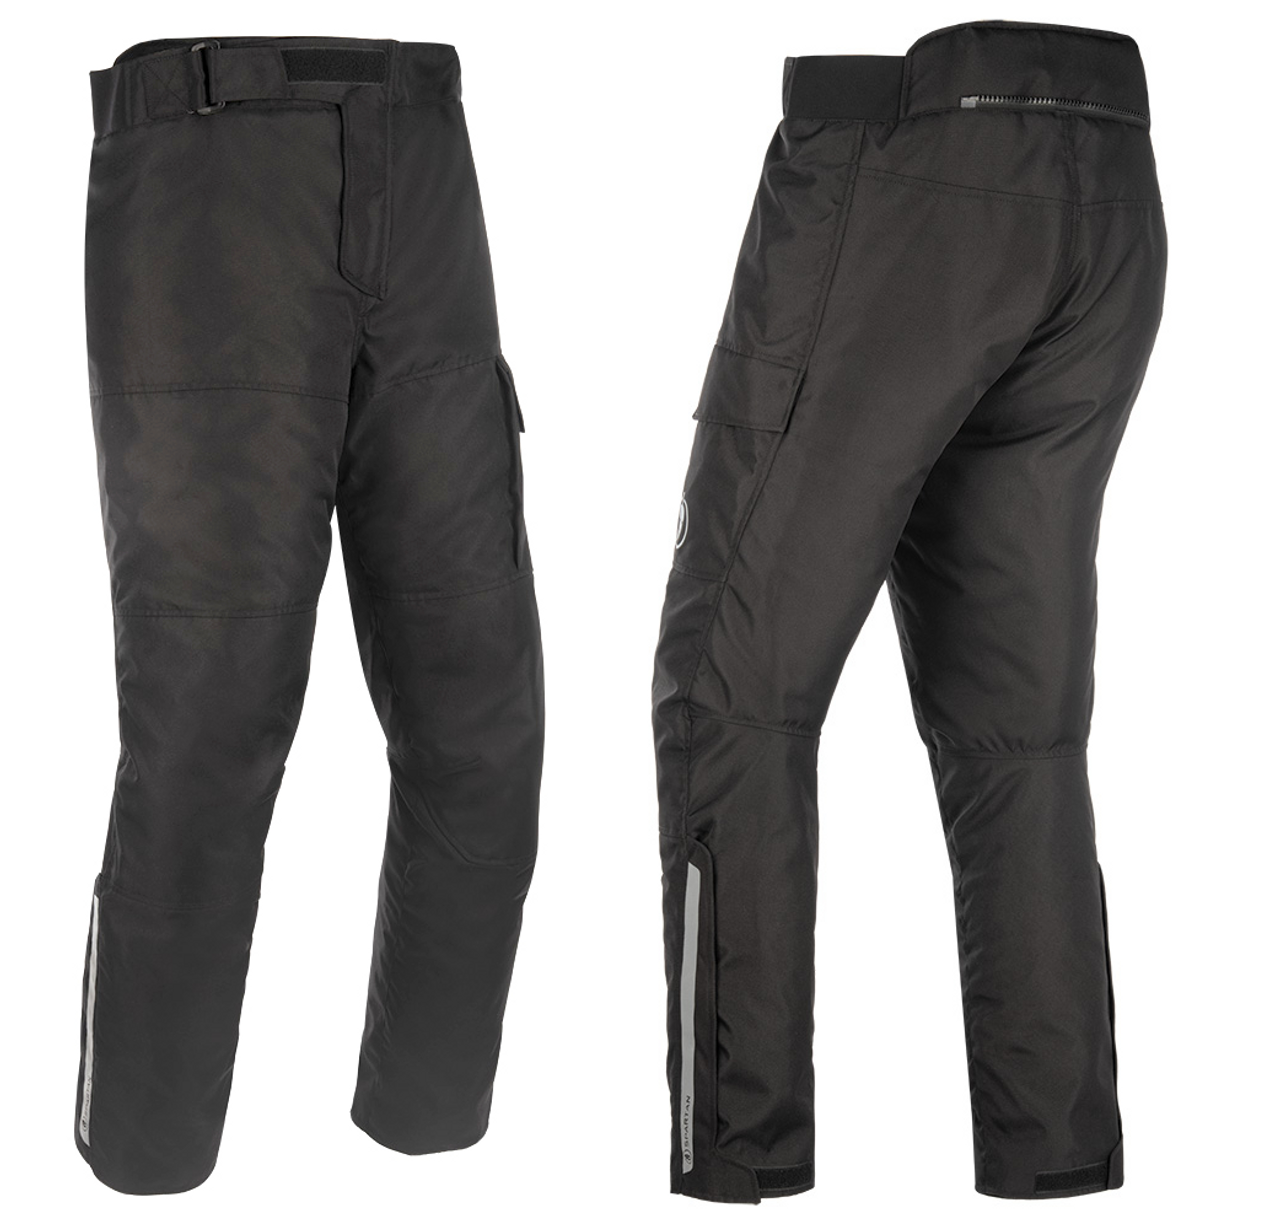 Spartan T17 Textile Motorcycle Pants Waterproof Armoured Trousers Black  JampS  eBay